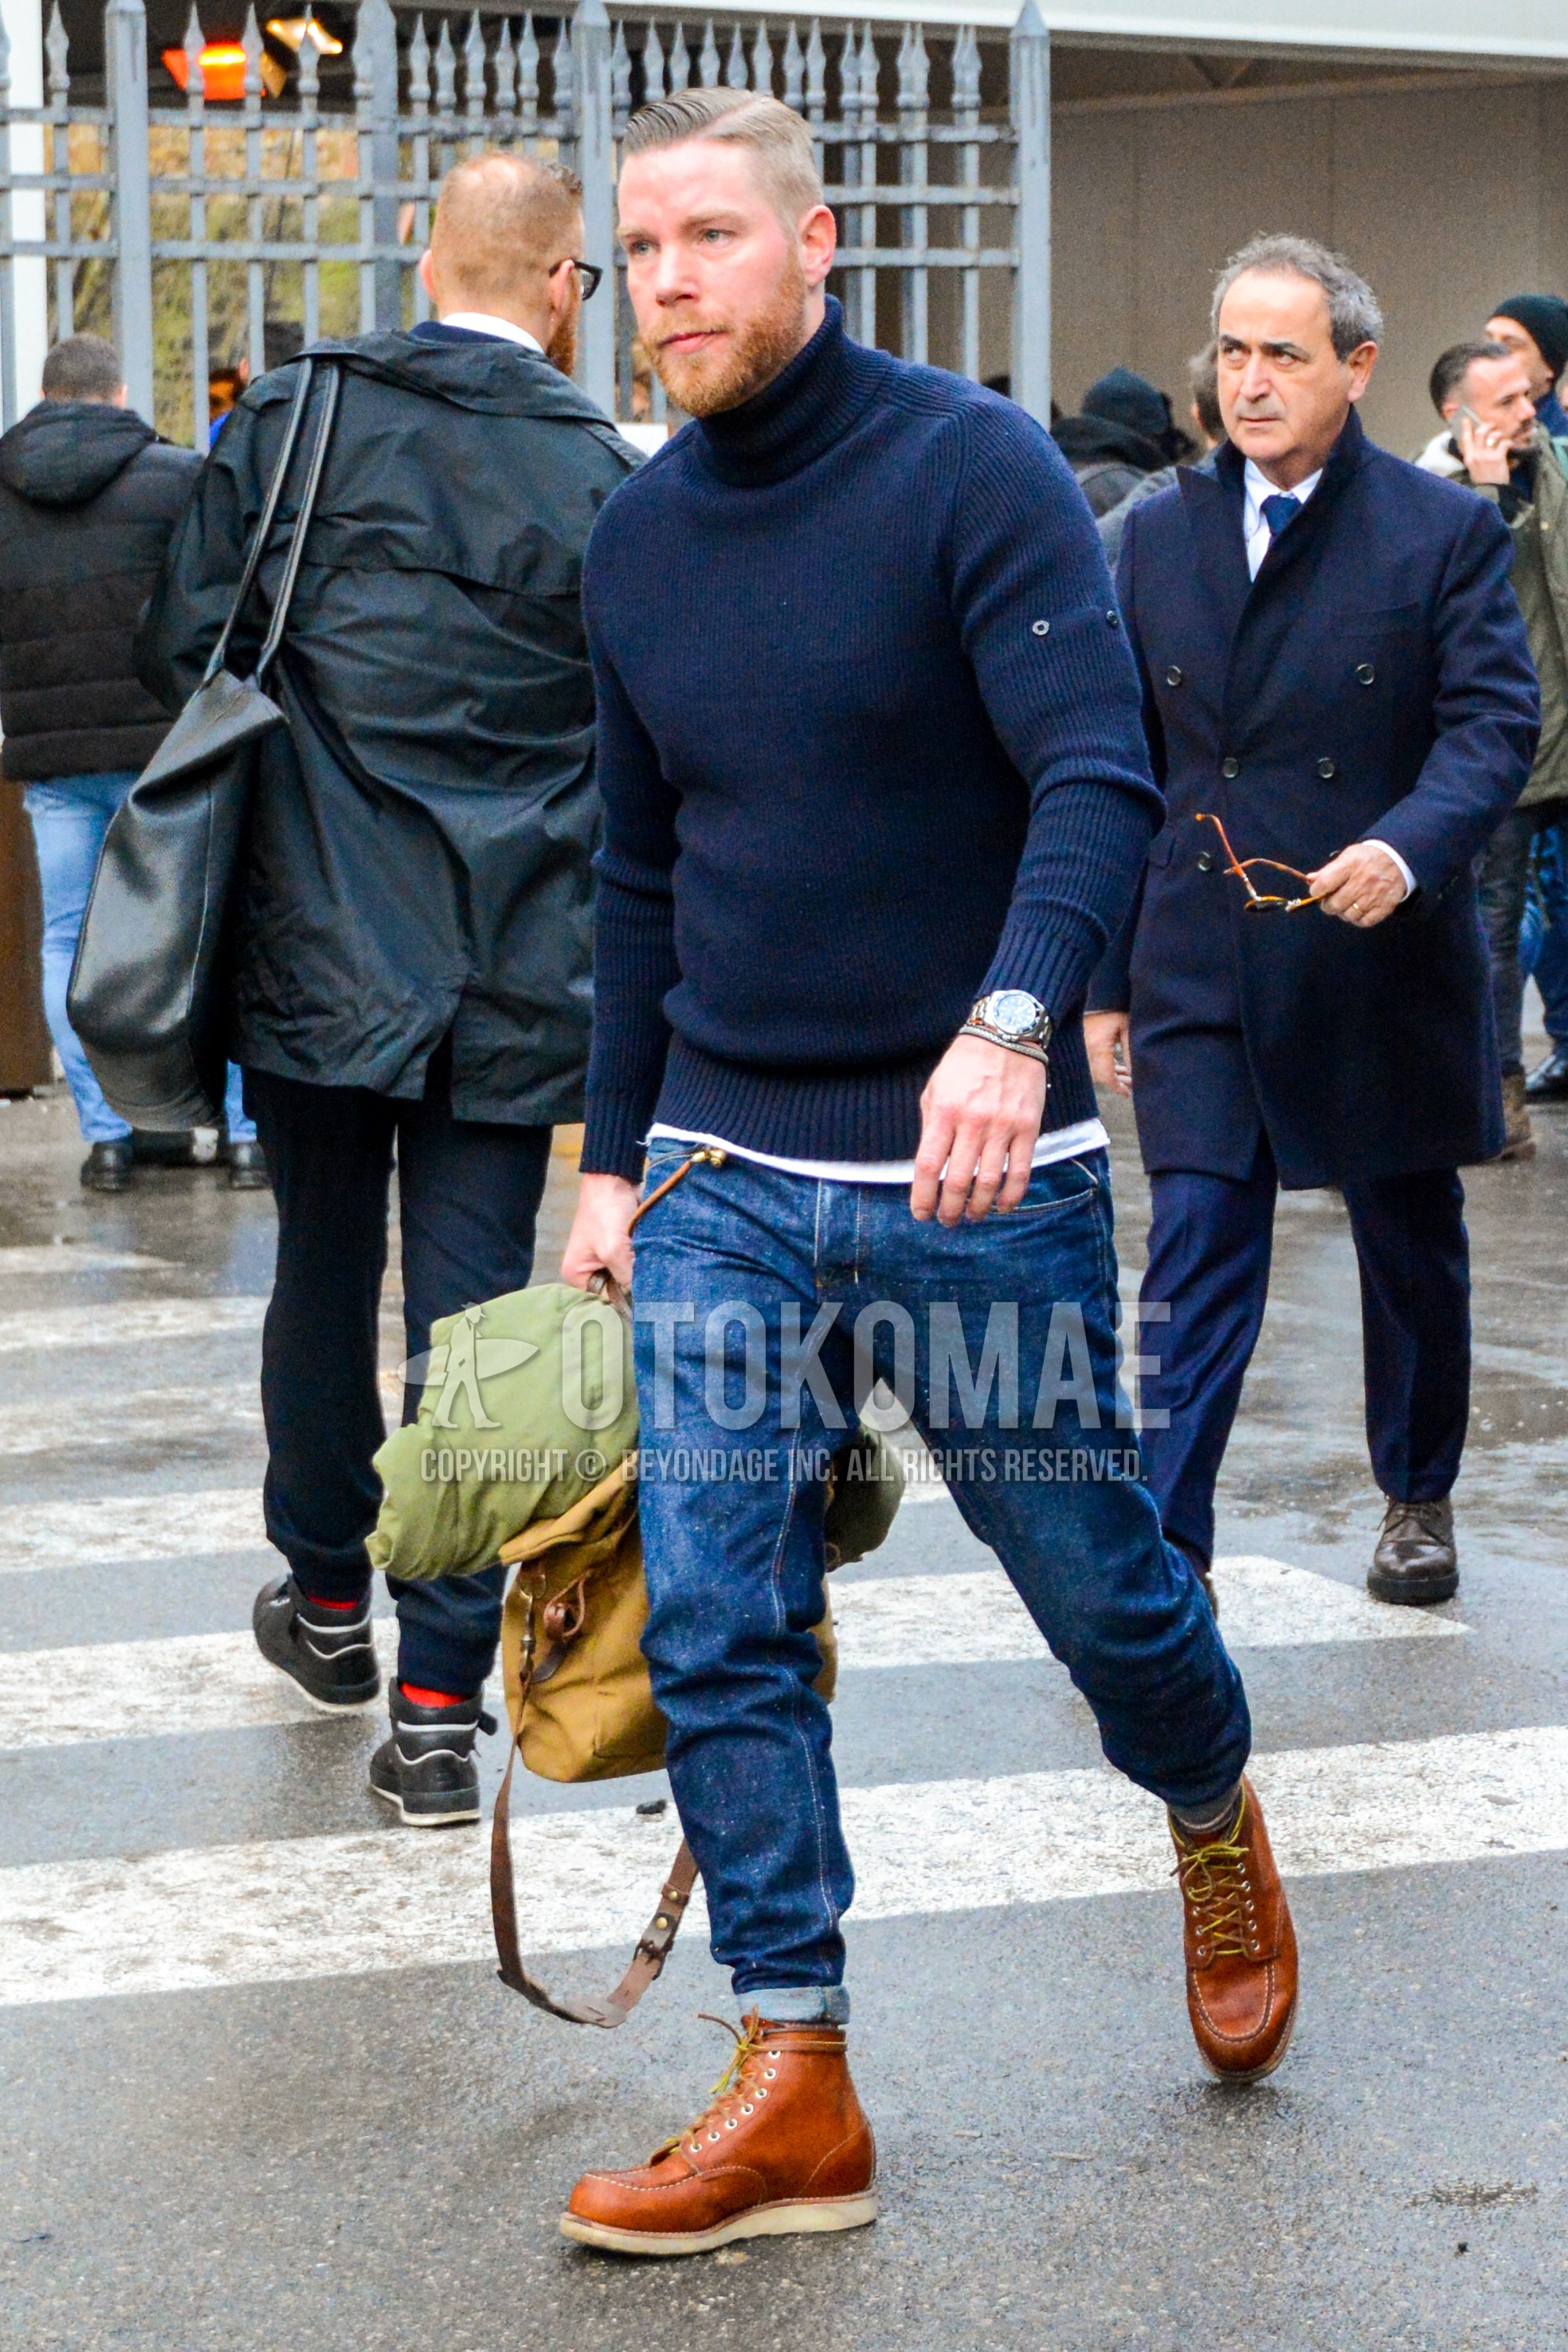 Men's winter outfit with navy plain turtleneck knit, blue plain denim/jeans, brown work boots.